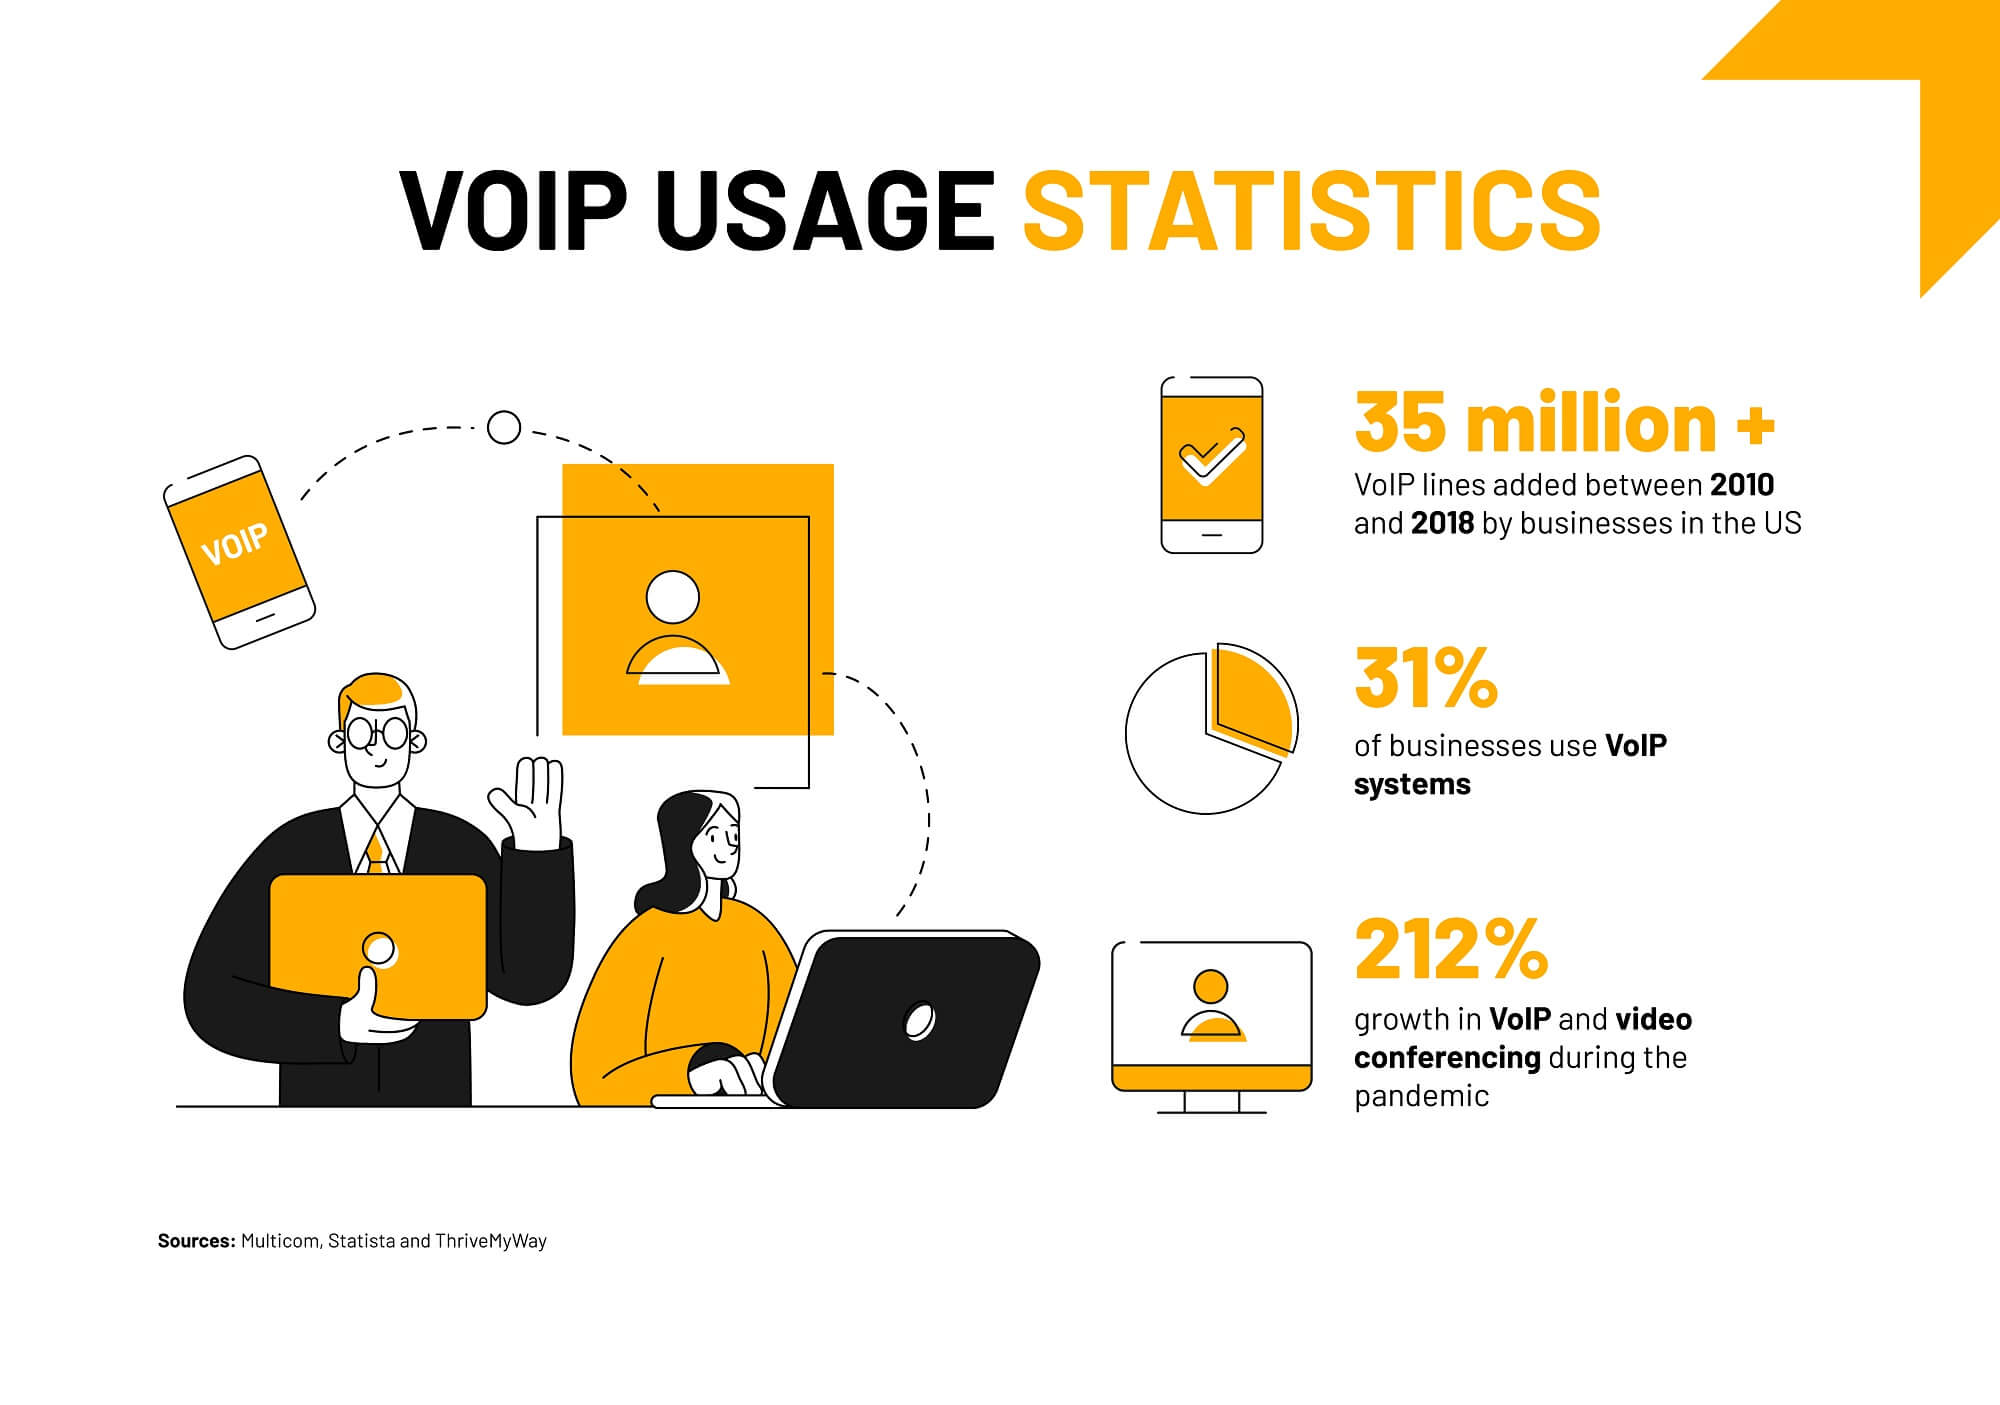 VoIP usage statistics infographic